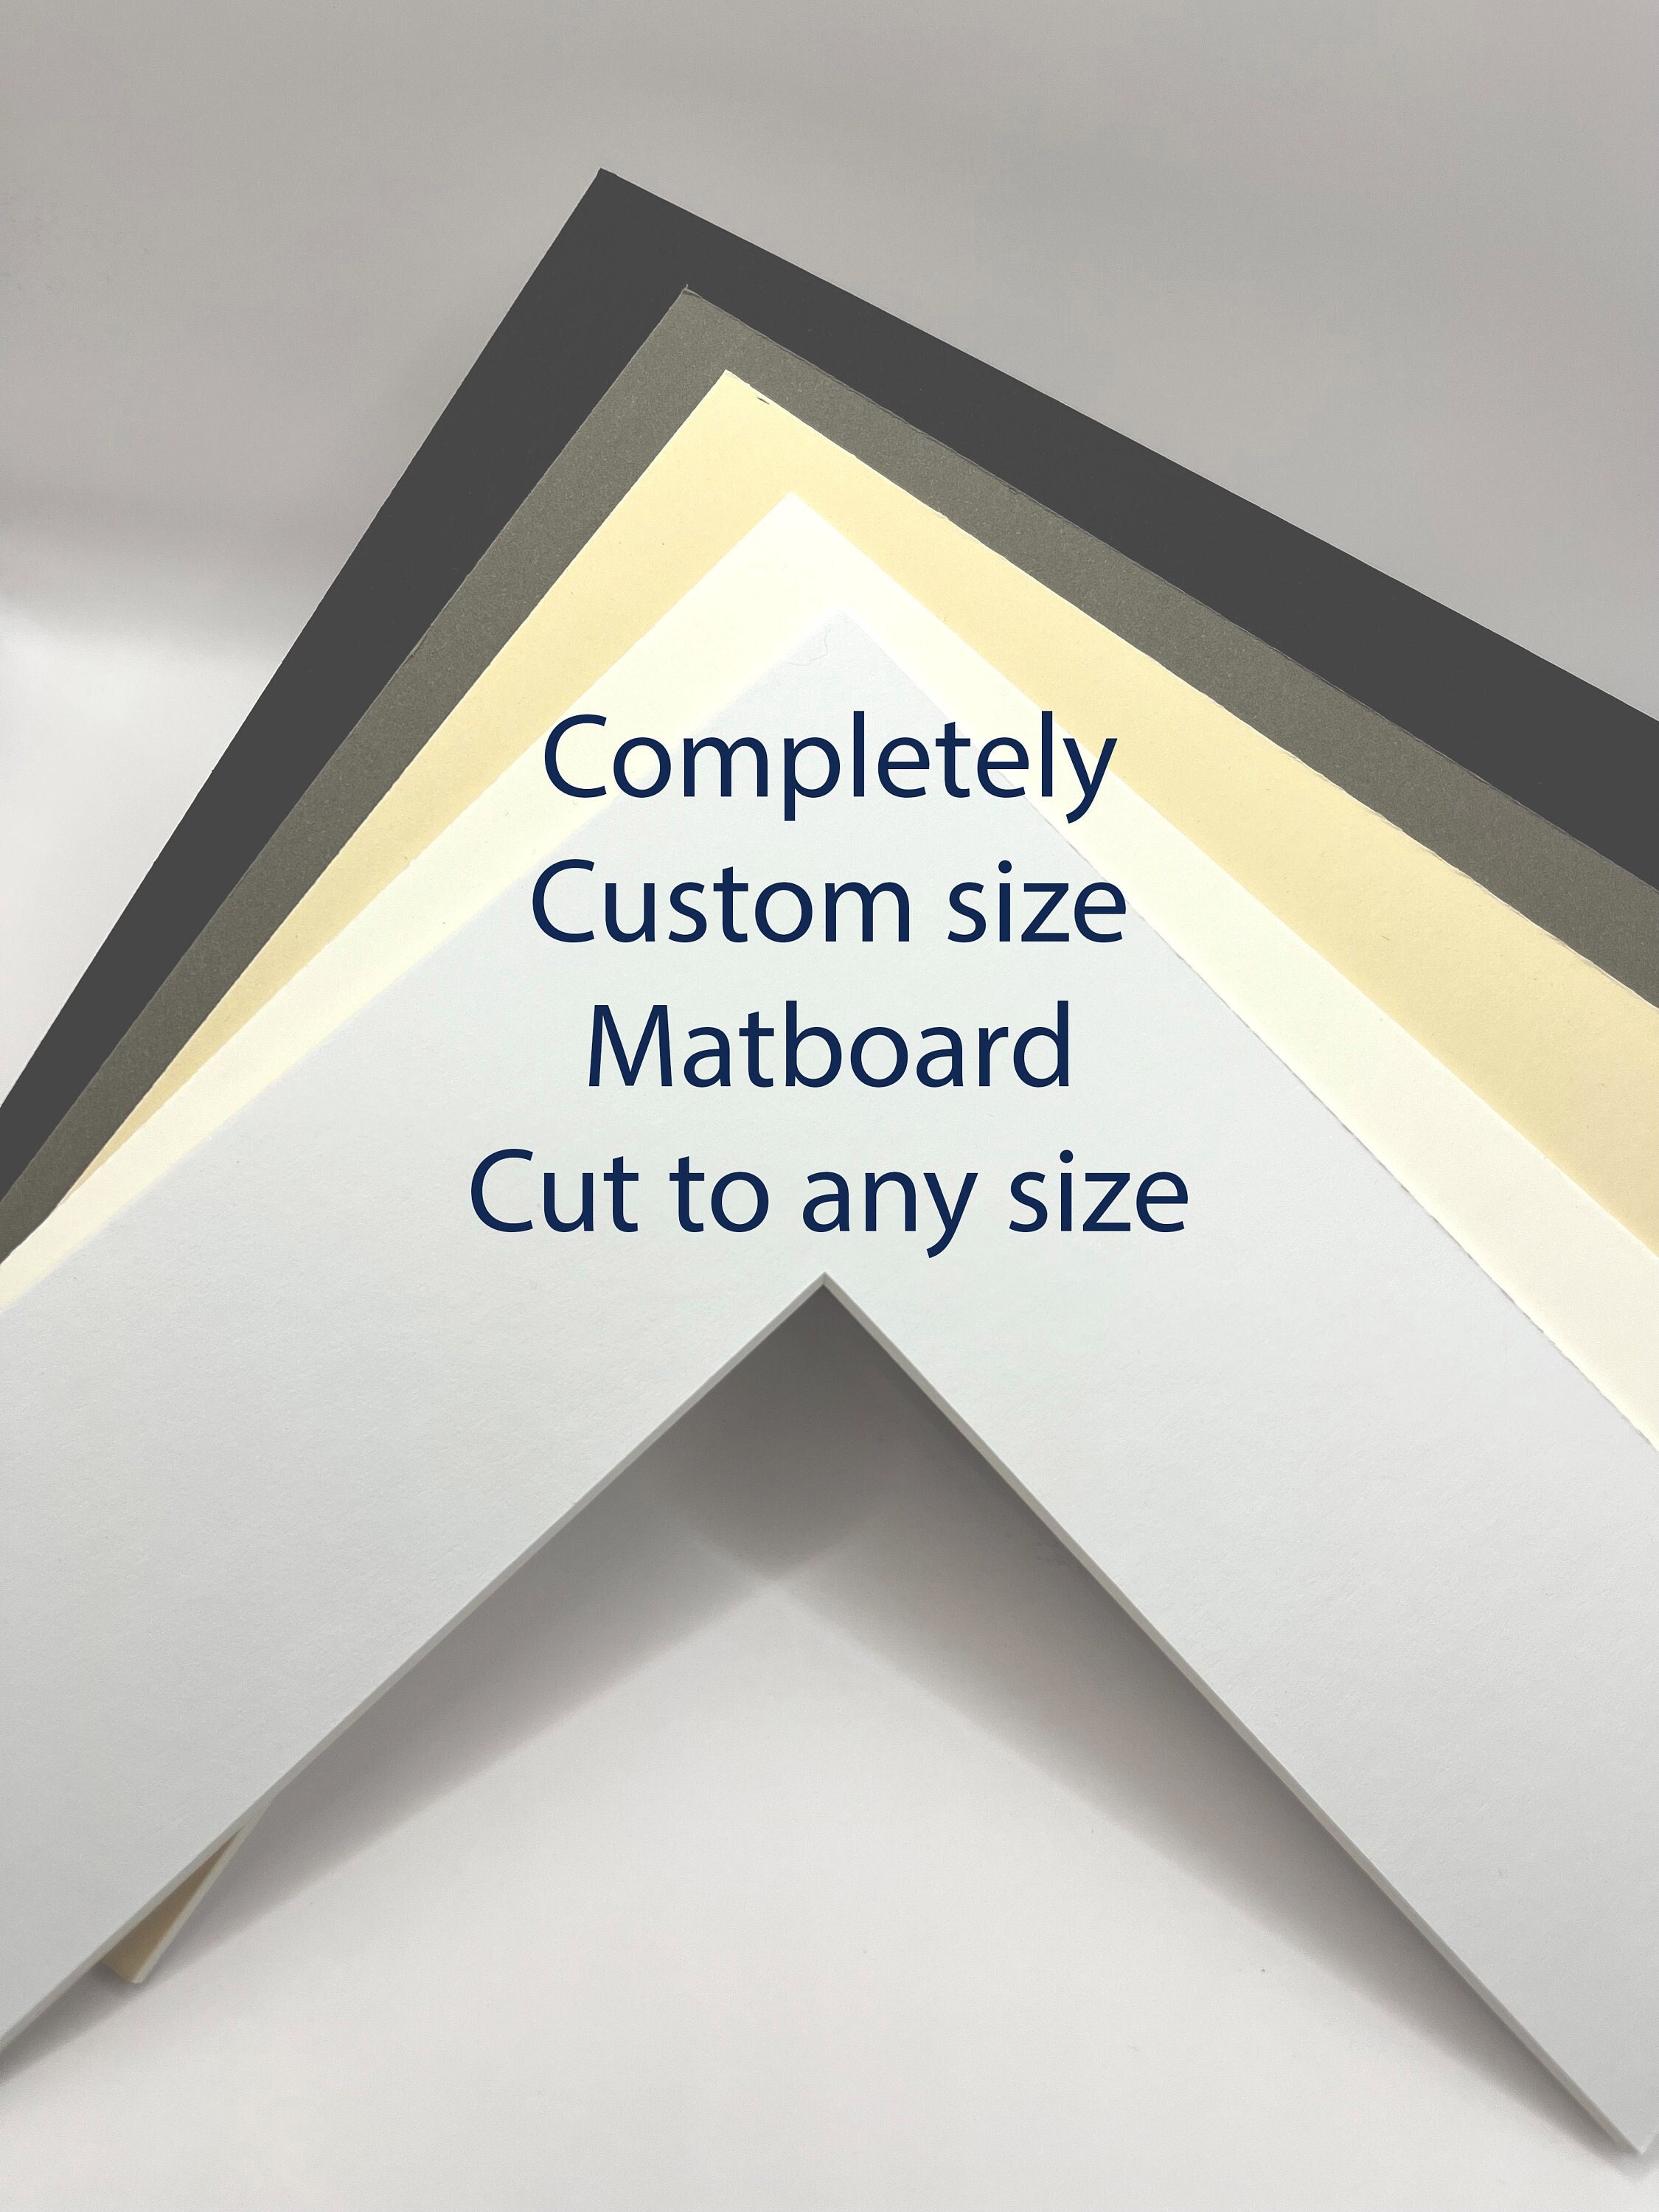 Custom Matboards